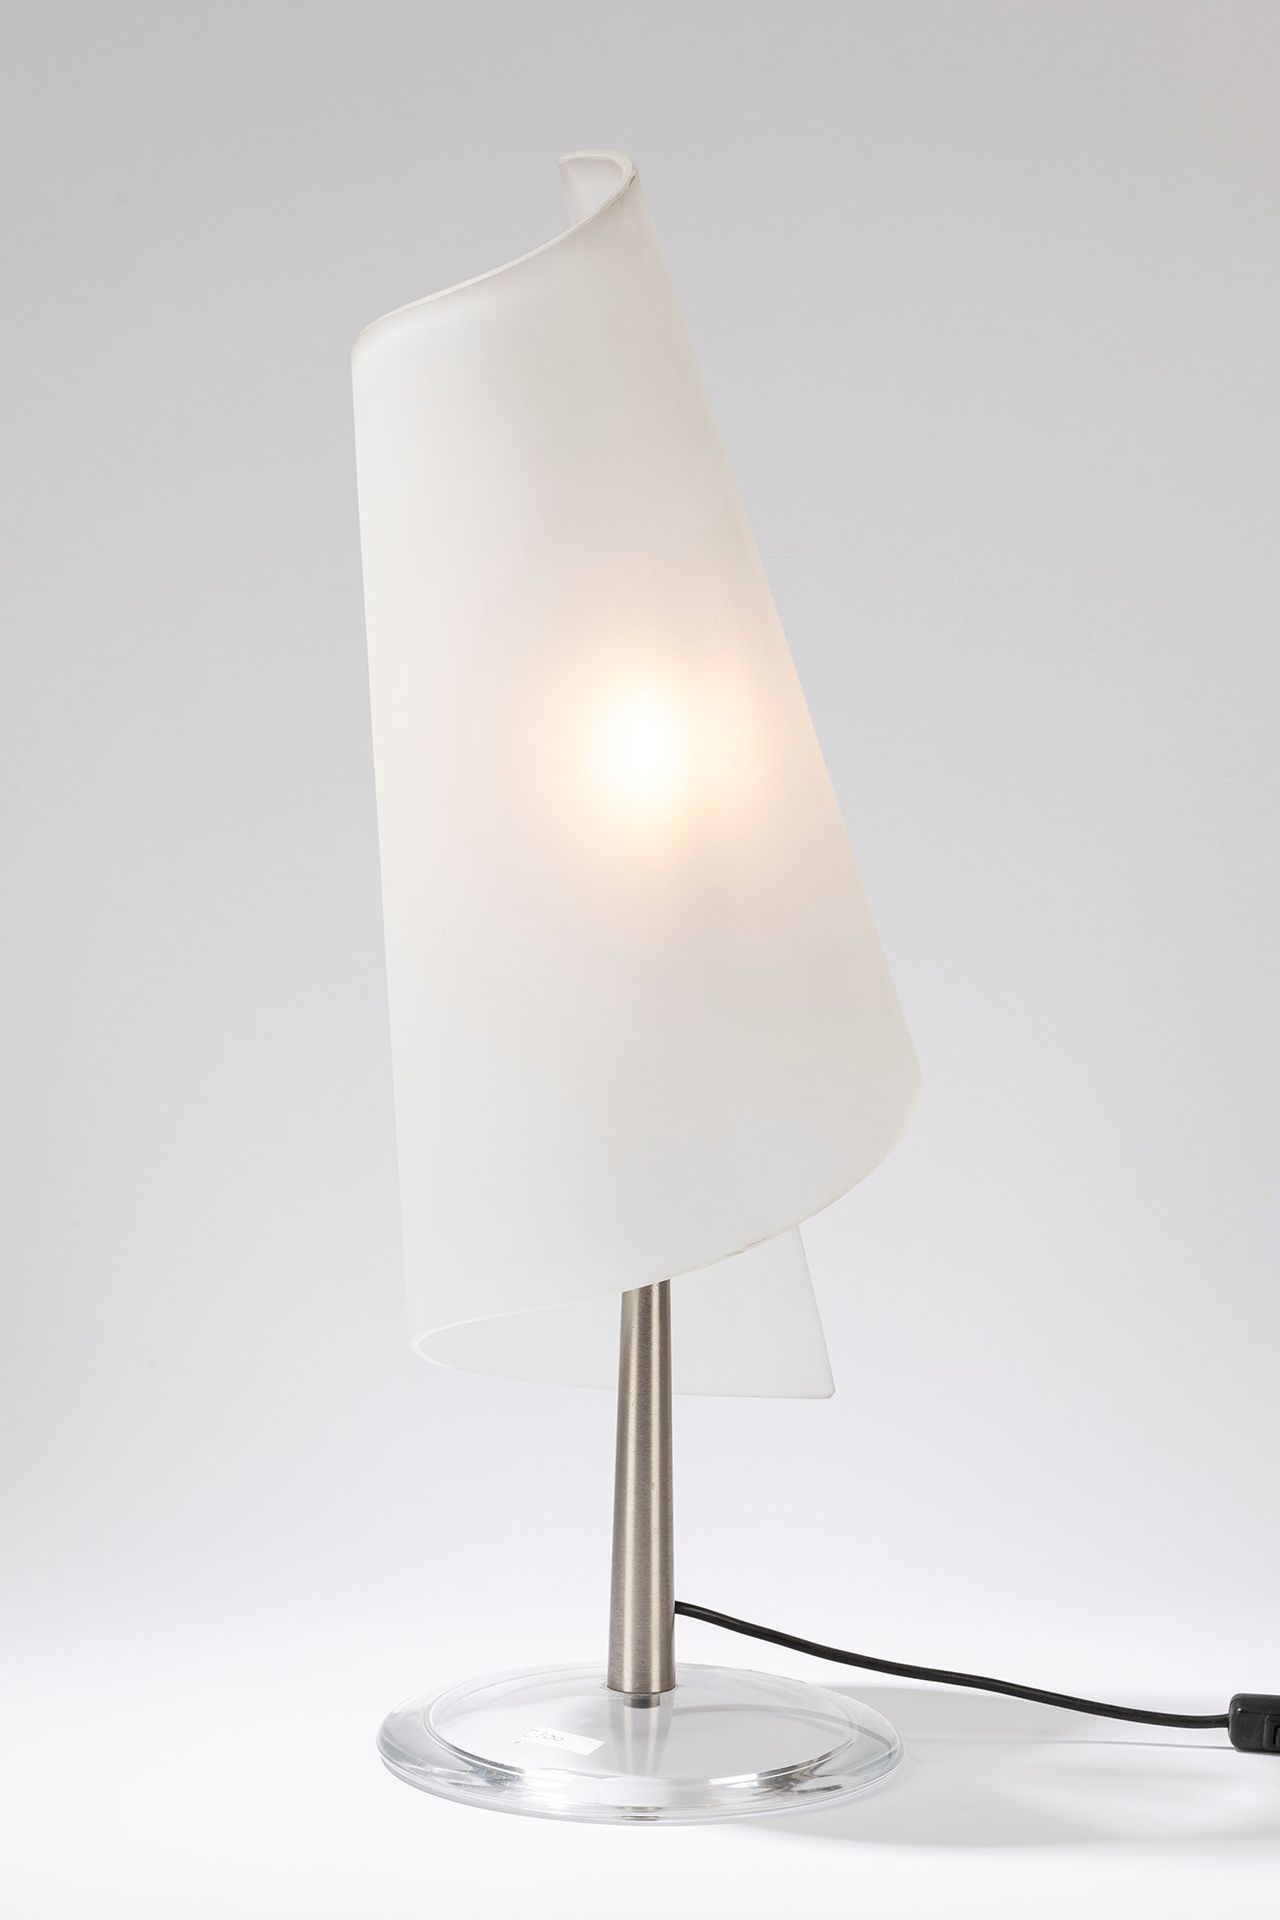 ITALIAN MANUFACTURE 台灯，70年代

cm h 70 x 23
，无色玻璃底座，铬金属杆，白色乳白玻璃扩散器。